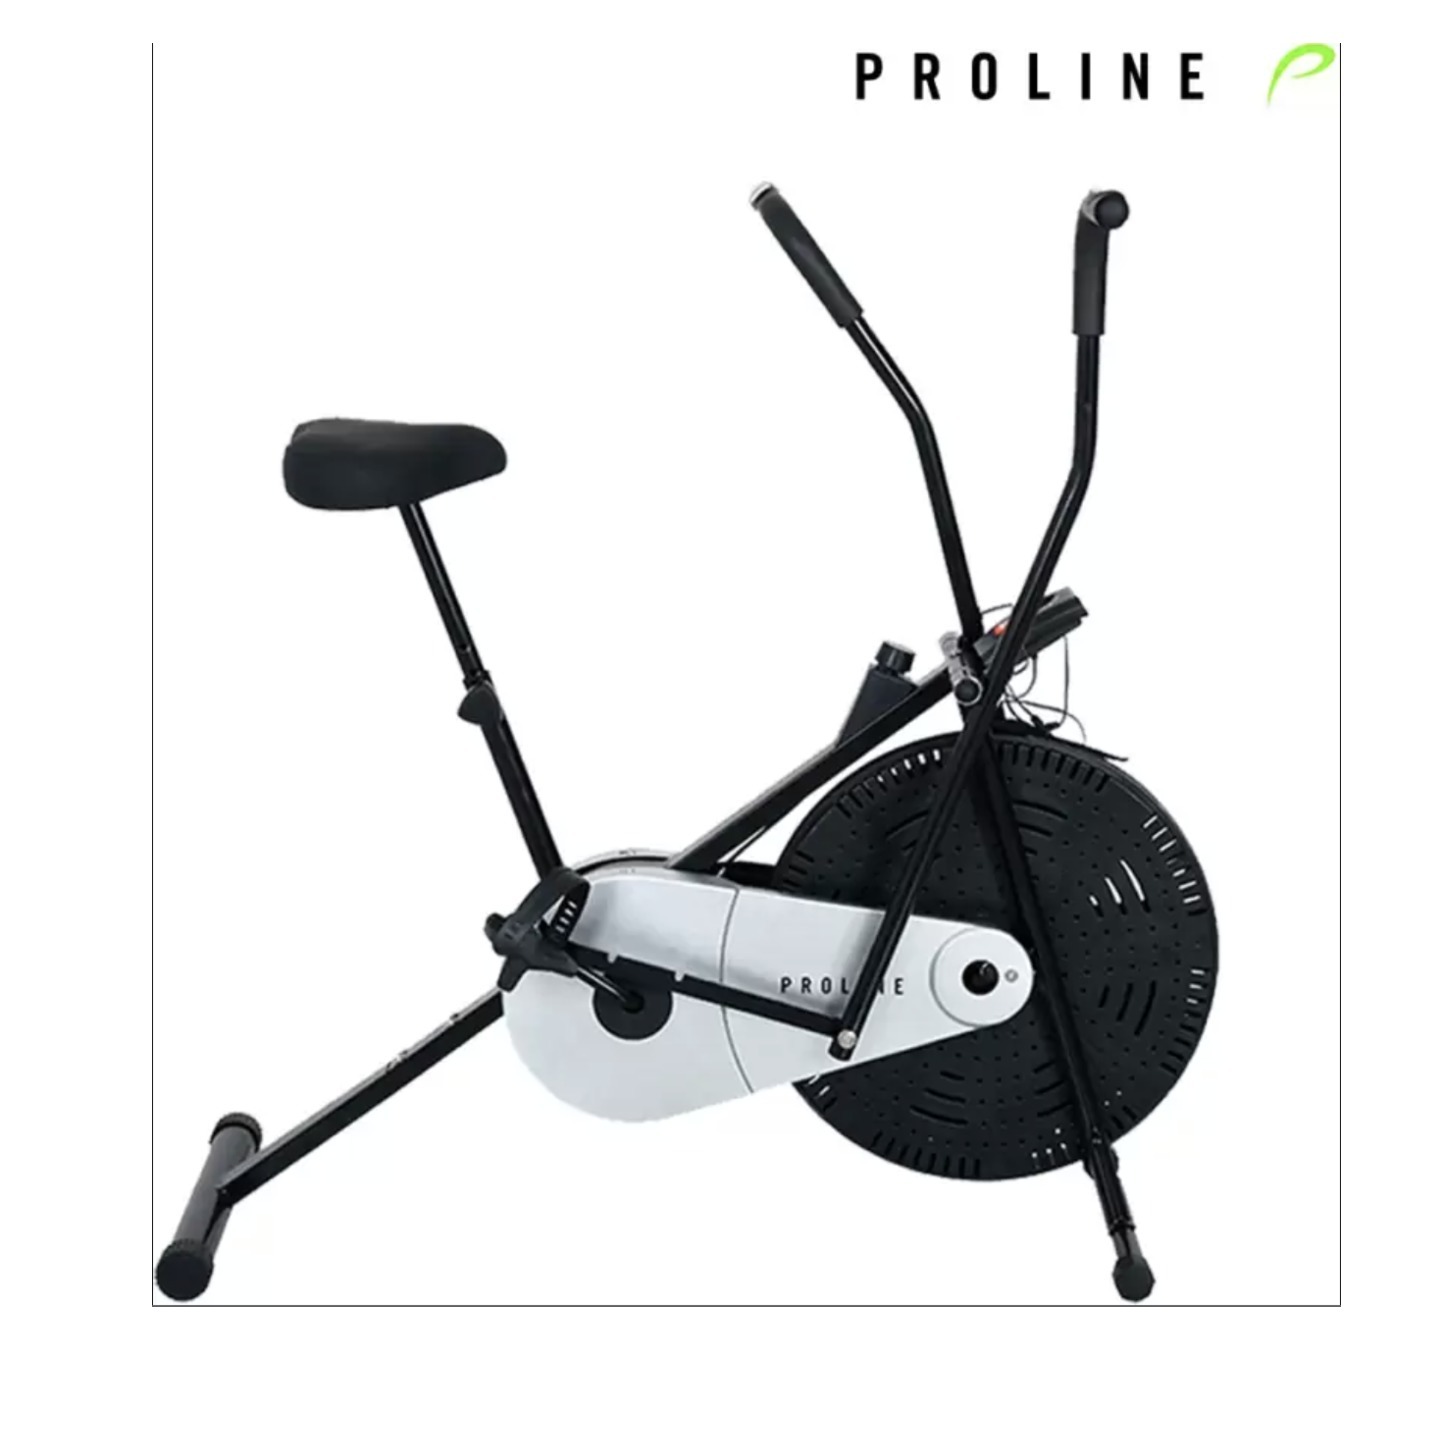 Proline Exercise Cycle AB1